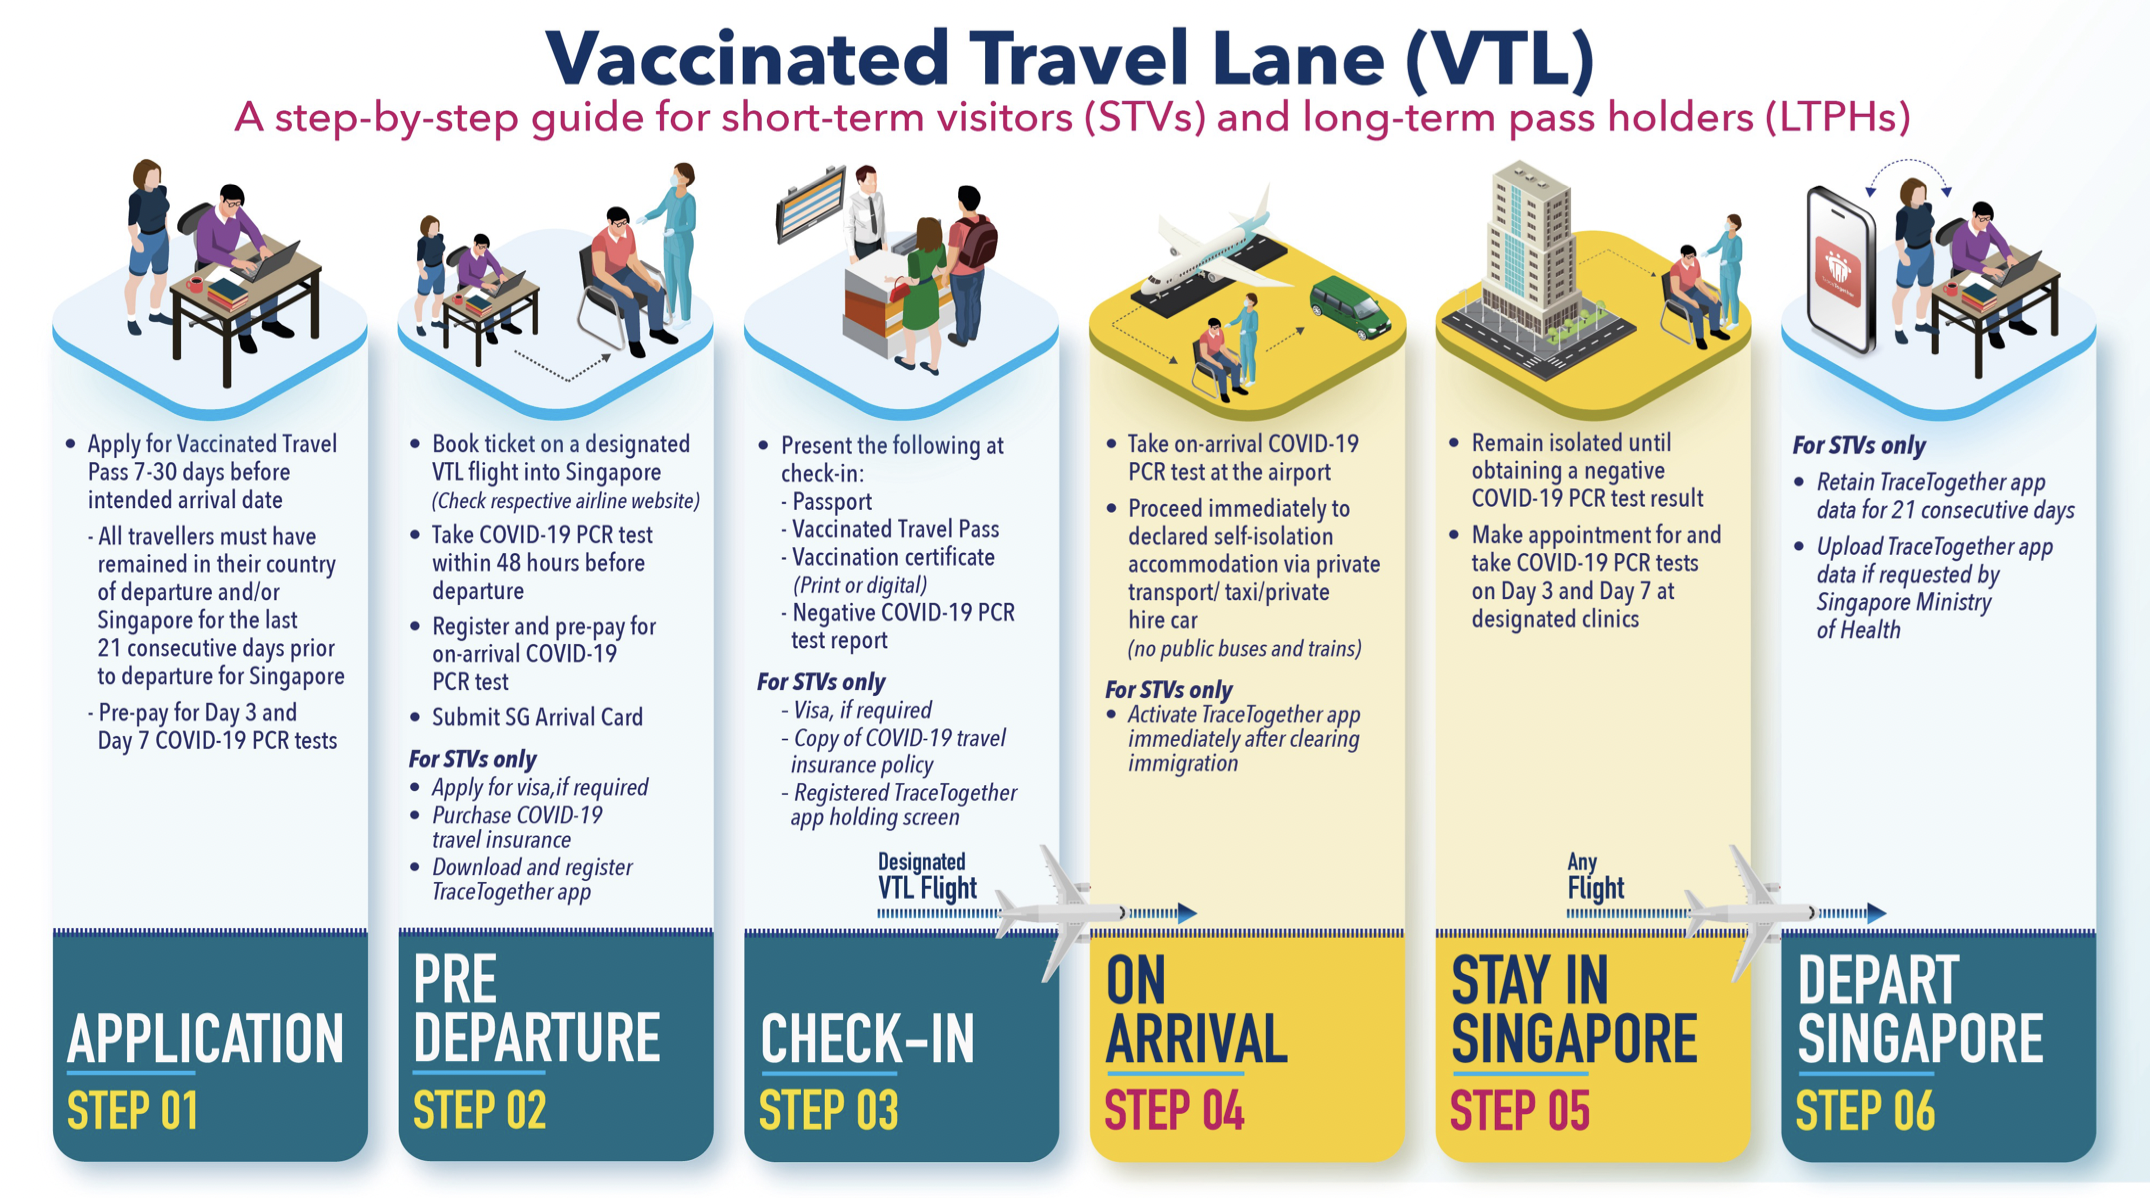 Travel lane vaccinated Vaccinated Travel